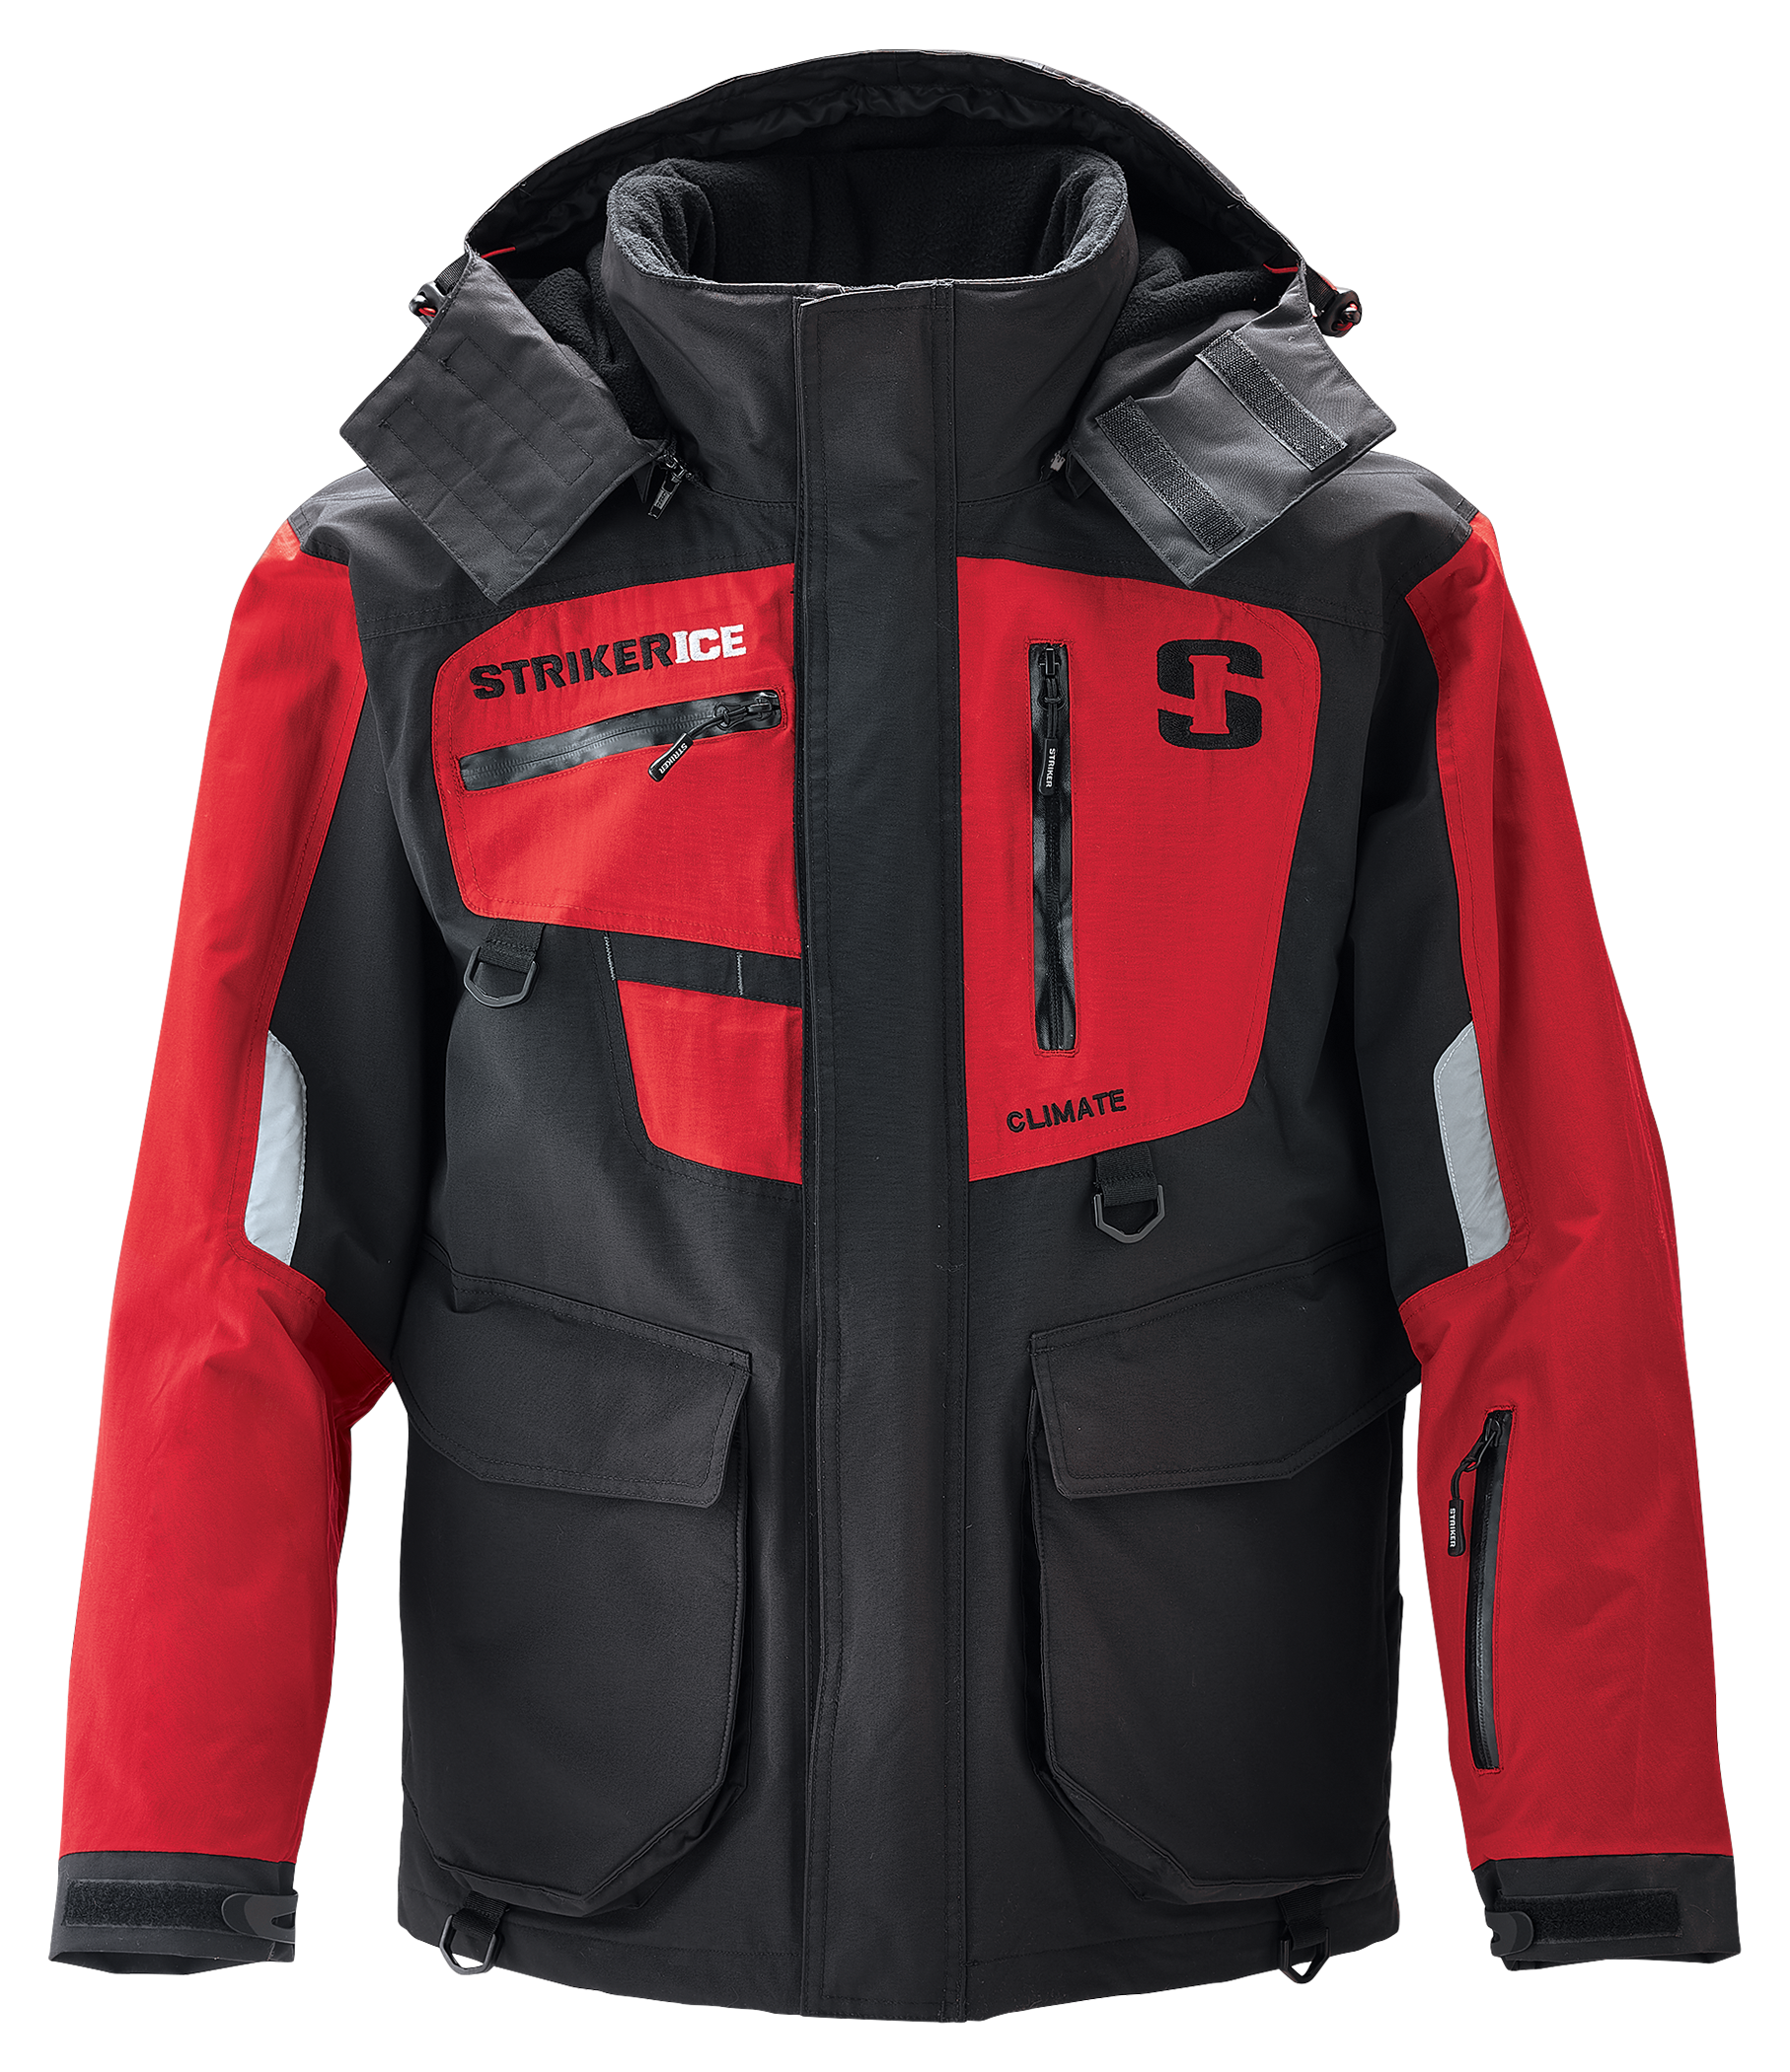 Striker Ice Climate Series Jacket for Men - Black/Red - XL -  StrikerICE